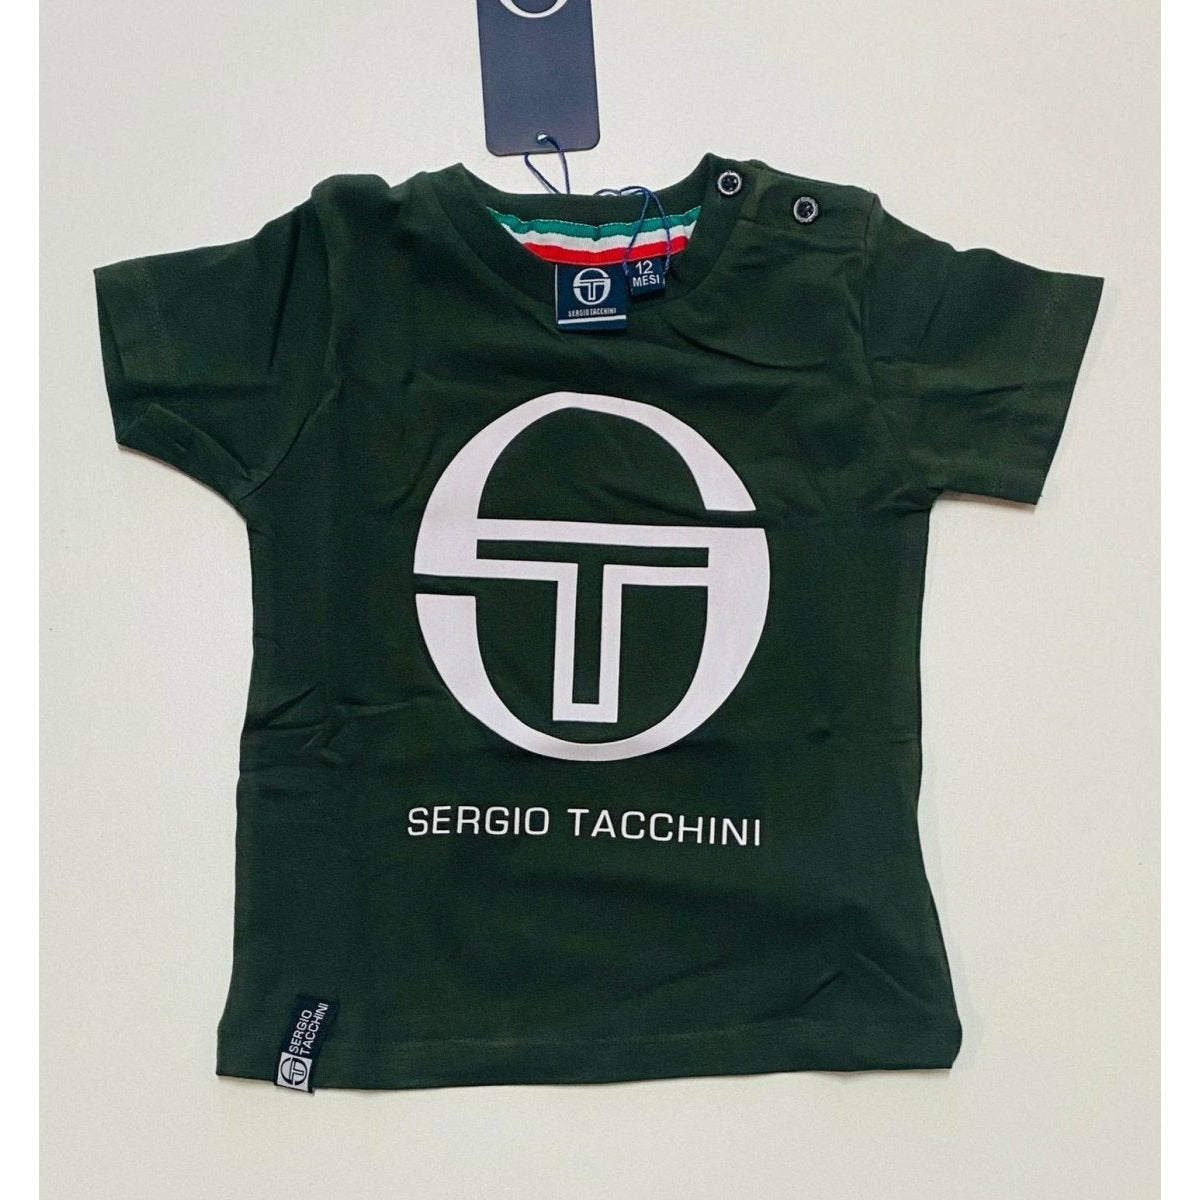 T-Shirt Sergio Tacchini Army - Mstore016